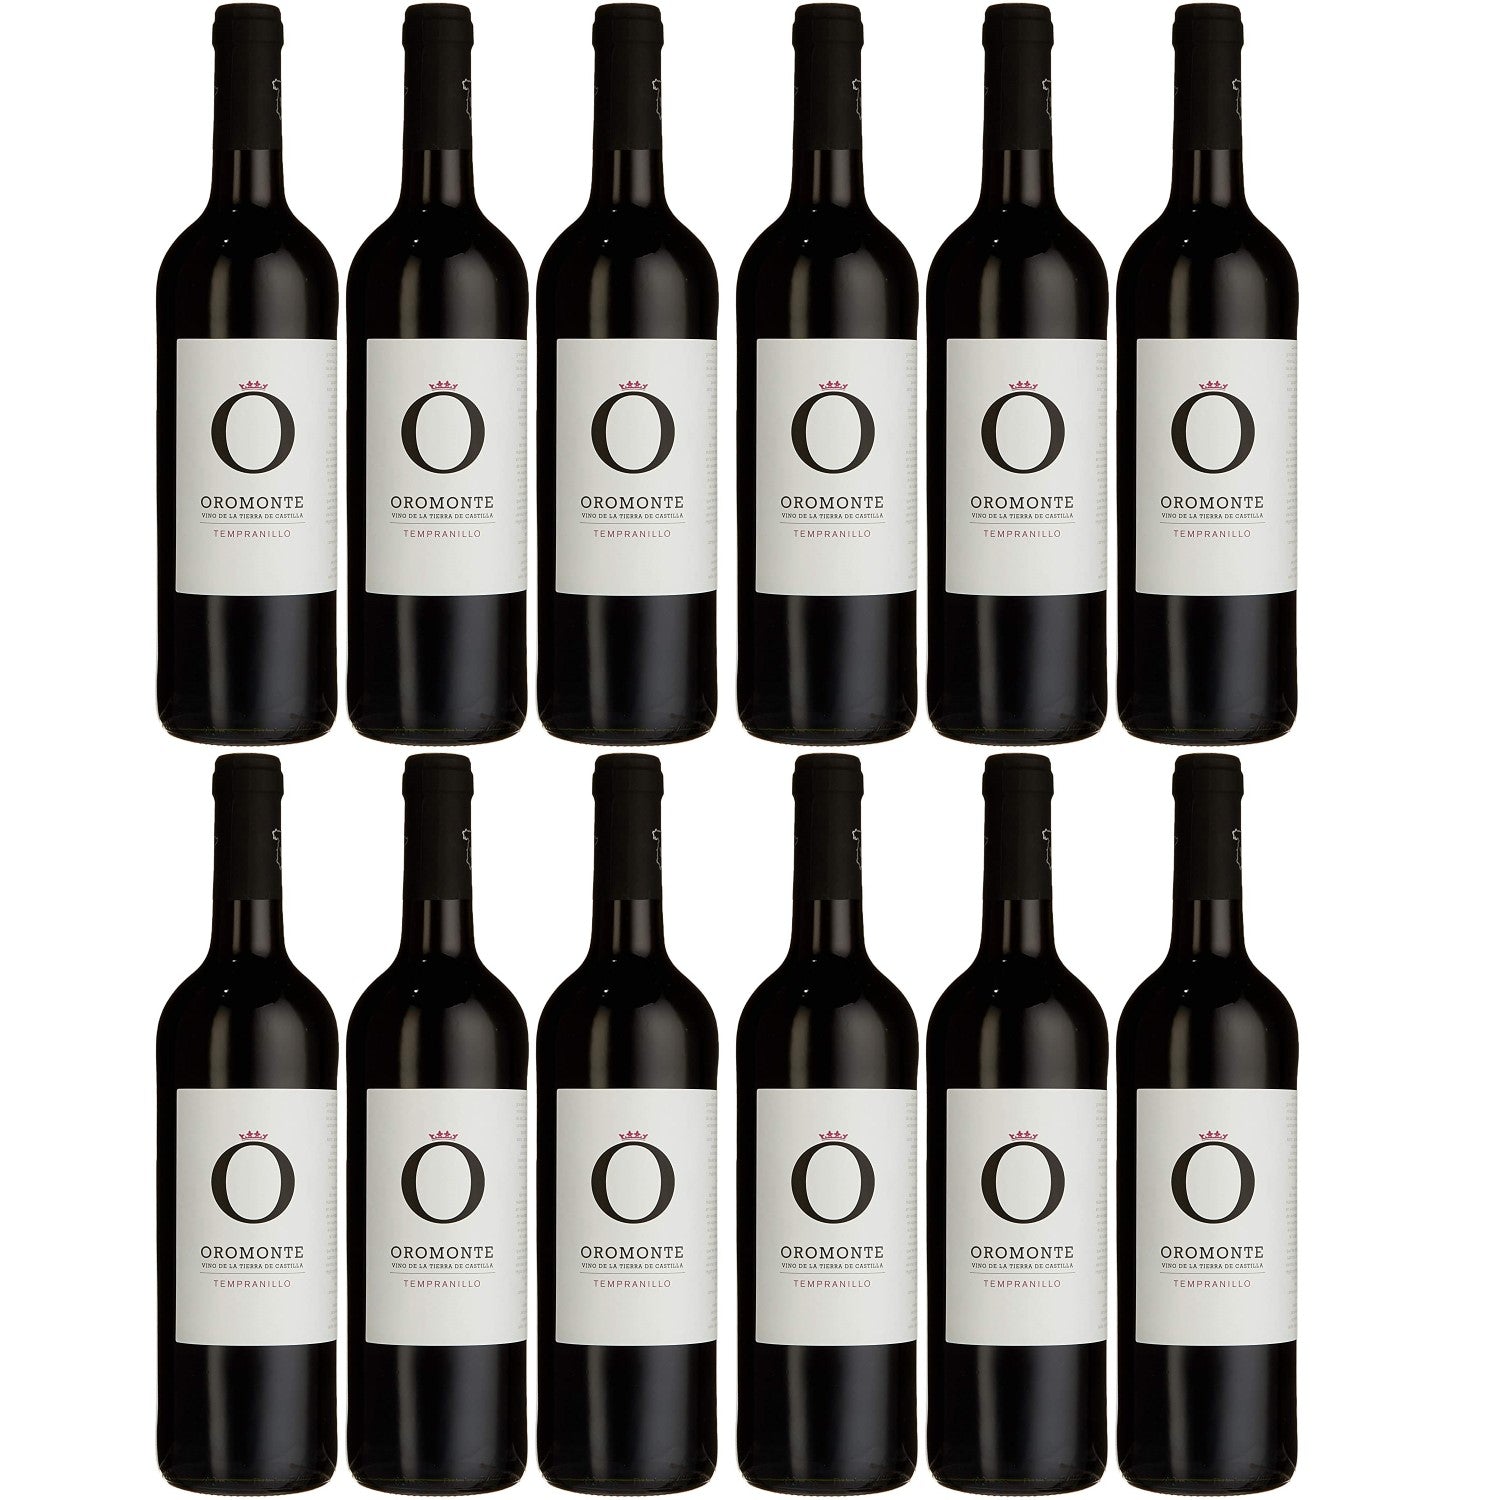 Bodegas Navarro Lopez Oromonte Vino Tinto Rotwein Wein trocken Spanien (12 x 1.0l) - Versanel -